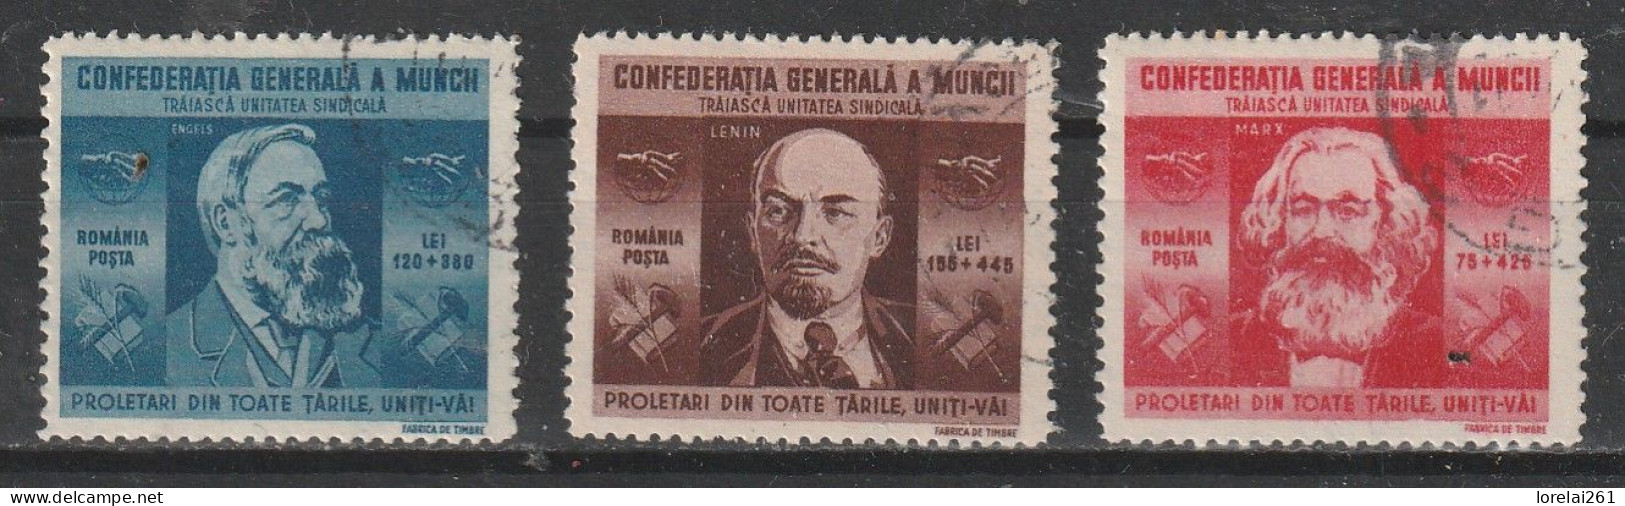 1945 - Confédération Générale Du Travail Mi No 861/863 - Gebruikt